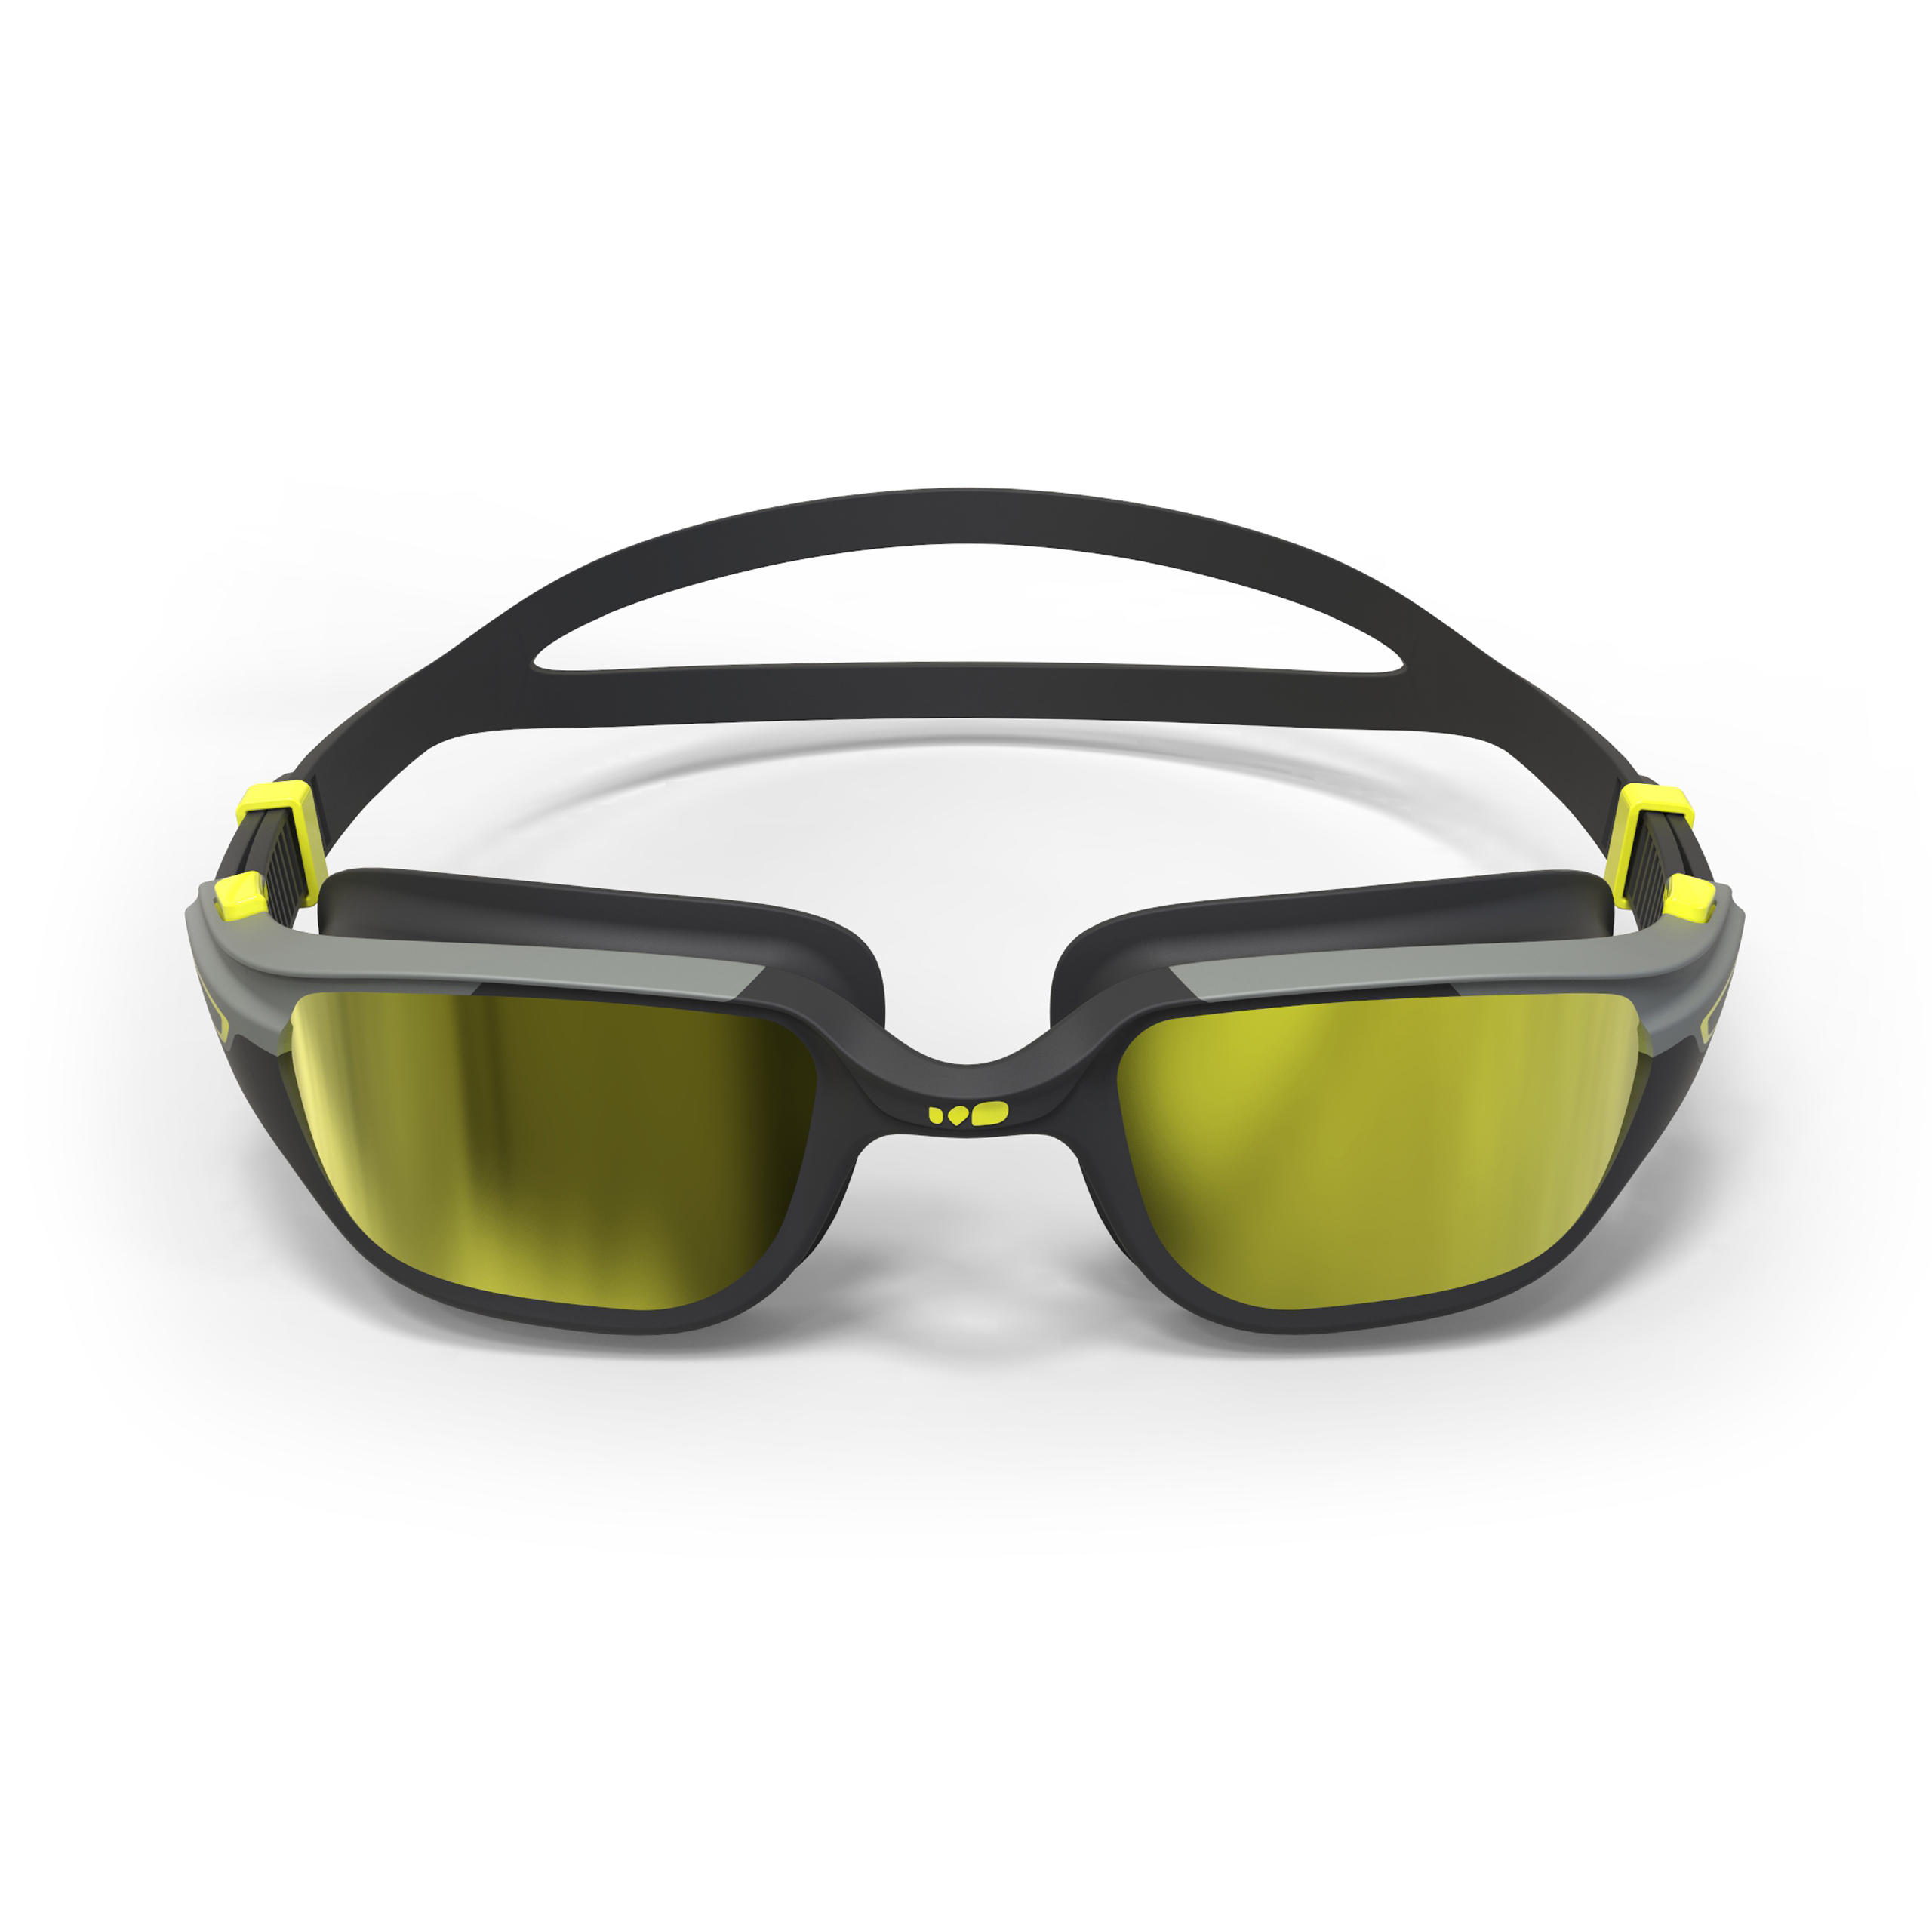 500 SPIRIT Swimming Goggles, Size L - Black, Grey, Mirror Lenses 4/7